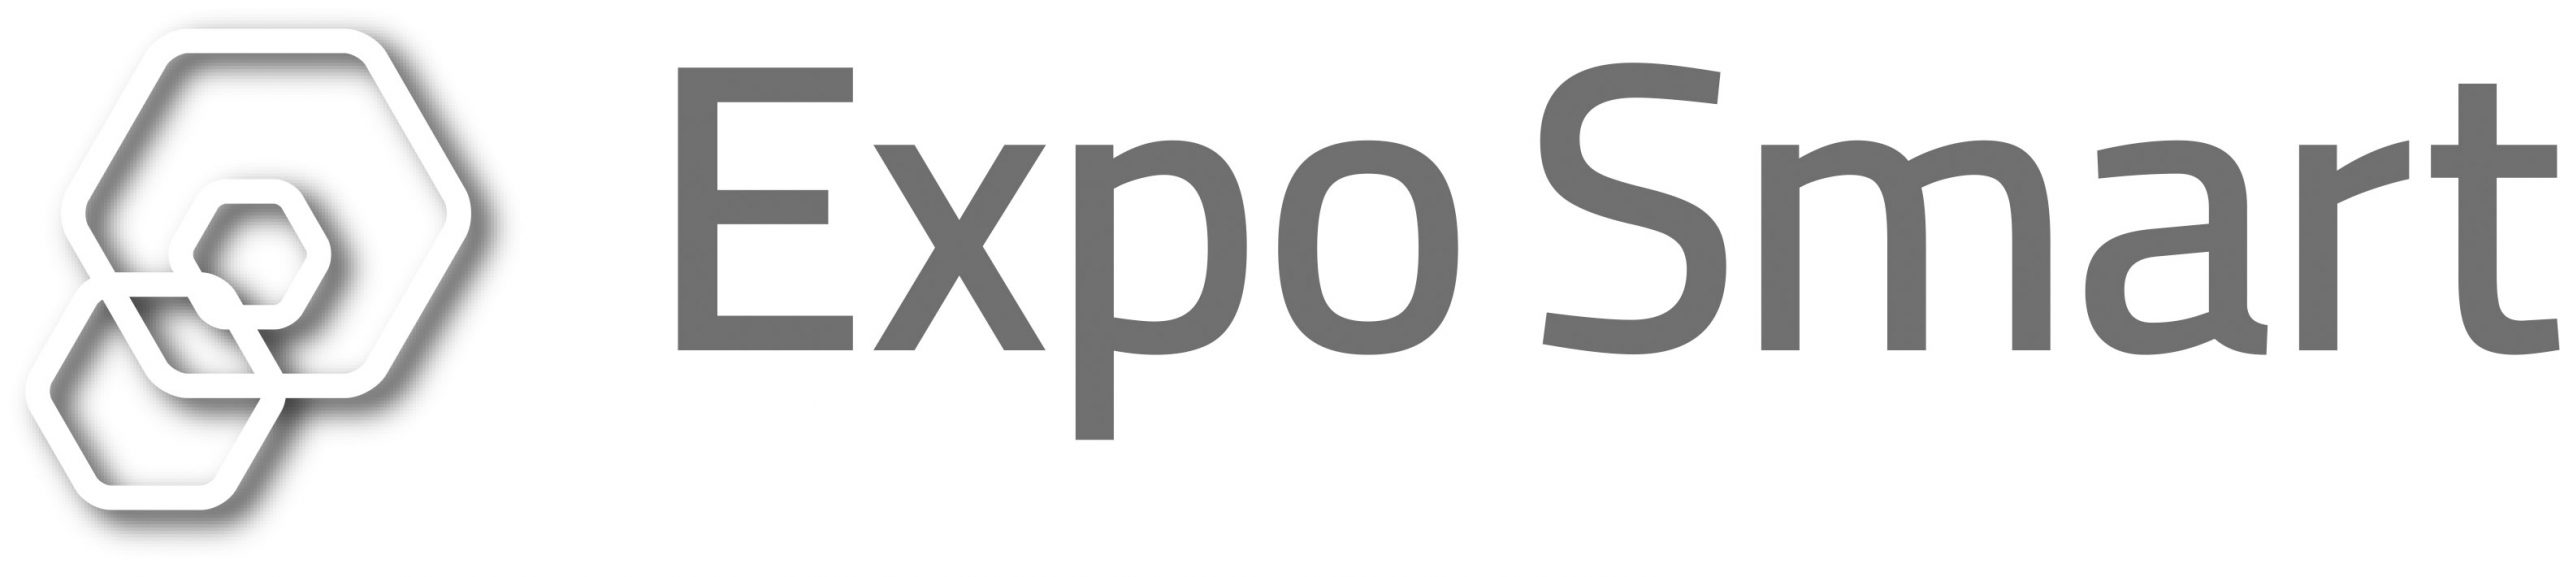 Expo Smart - Messe neu gedacht